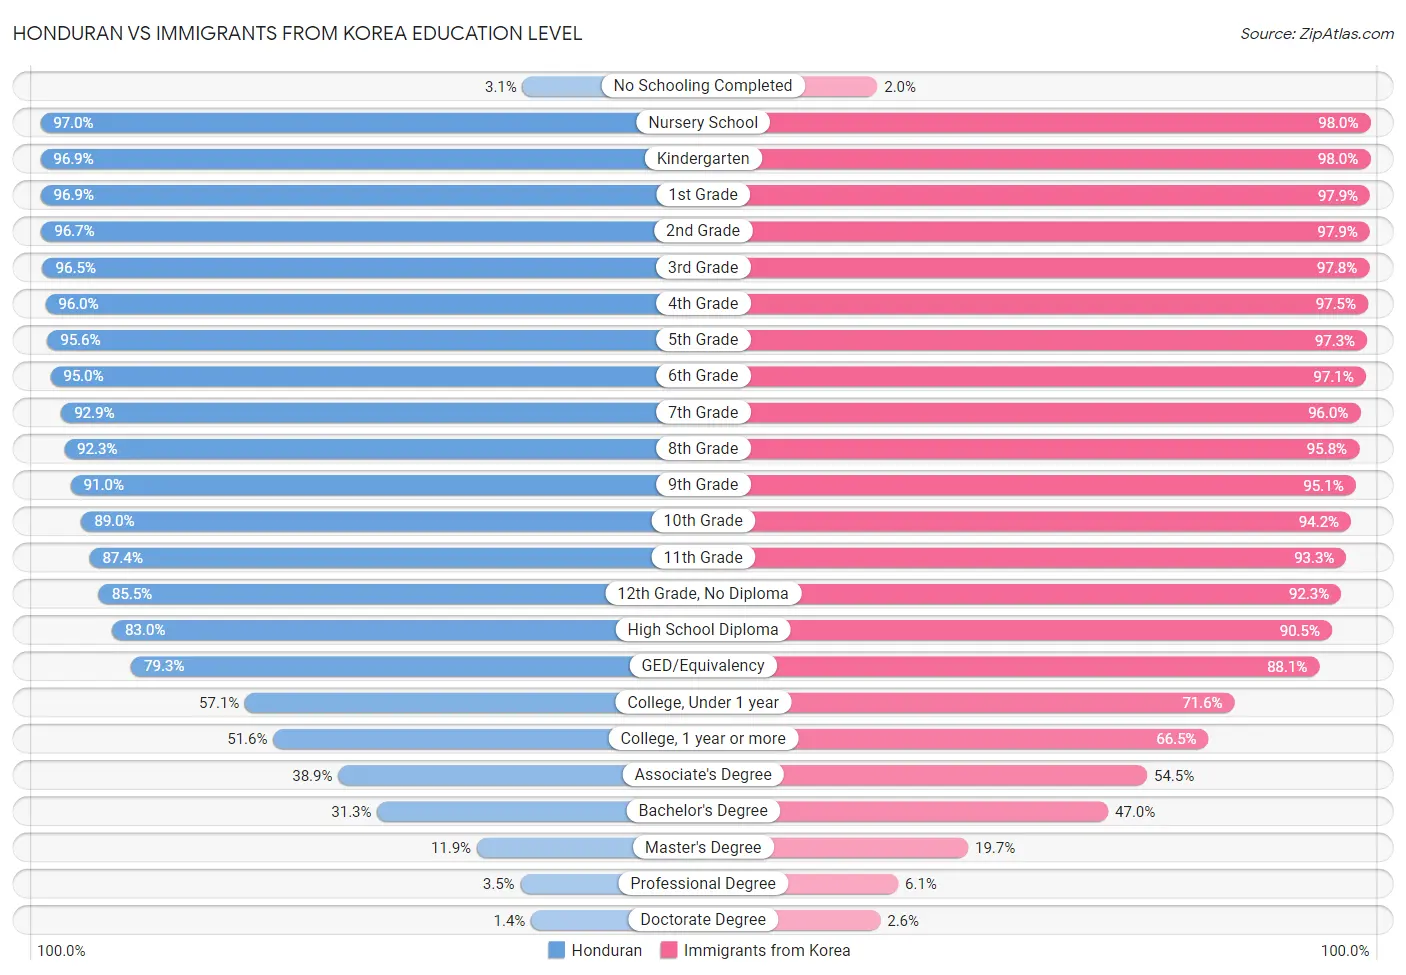 Honduran vs Immigrants from Korea Education Level